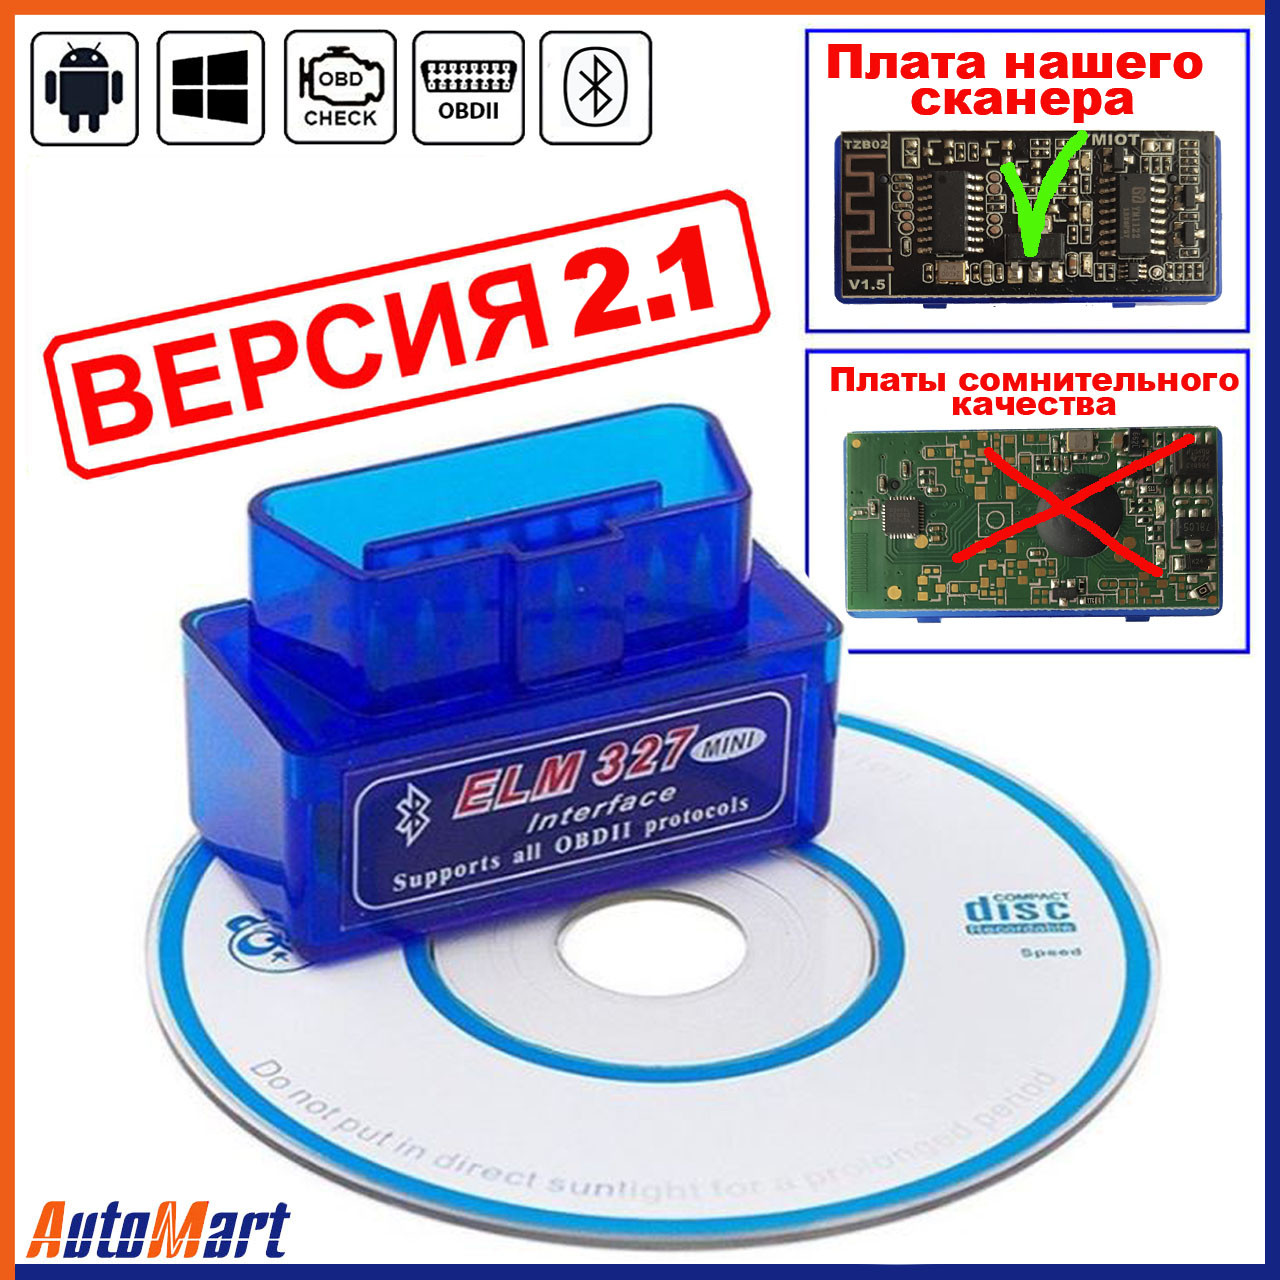 ELM327 mini v 2.1 Bluetooth OBD2 сканер адаптер для диагностики автомо